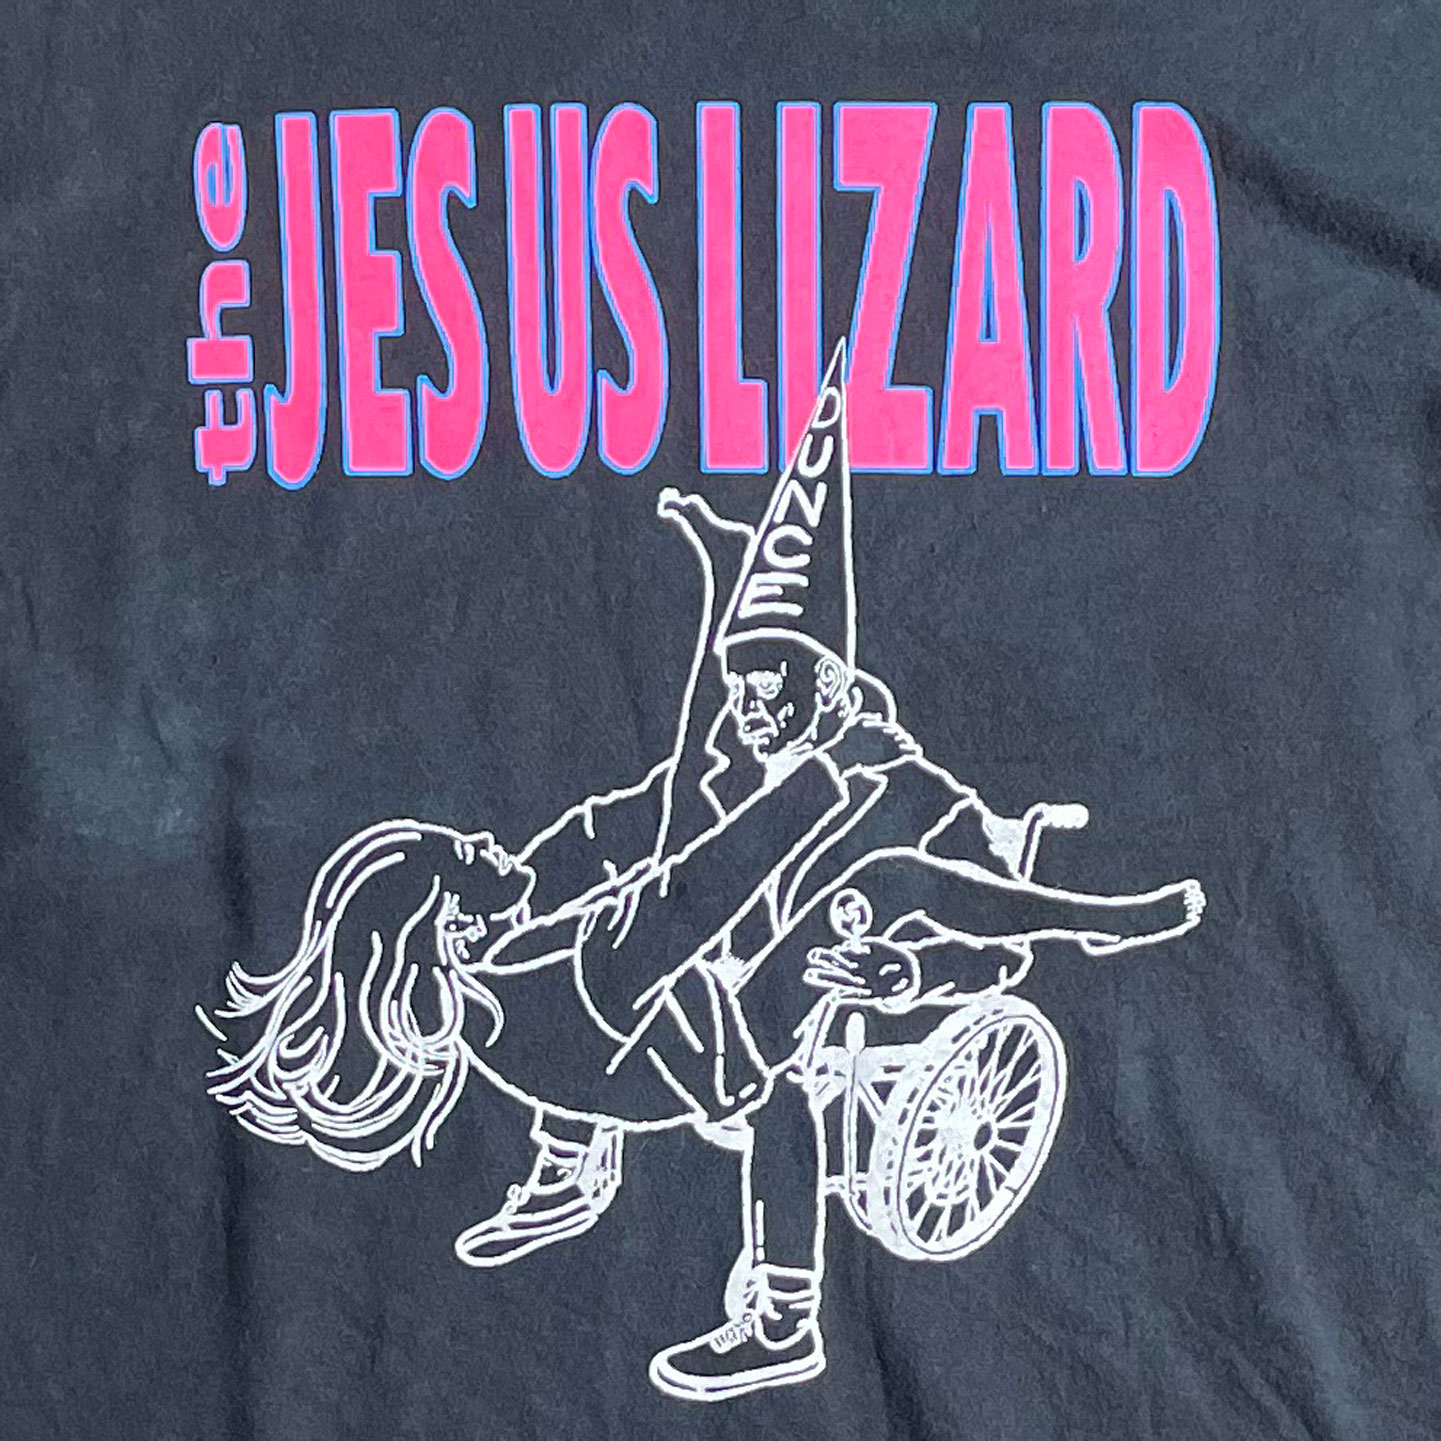 USED! THE JESUS LIZARD Tシャツ